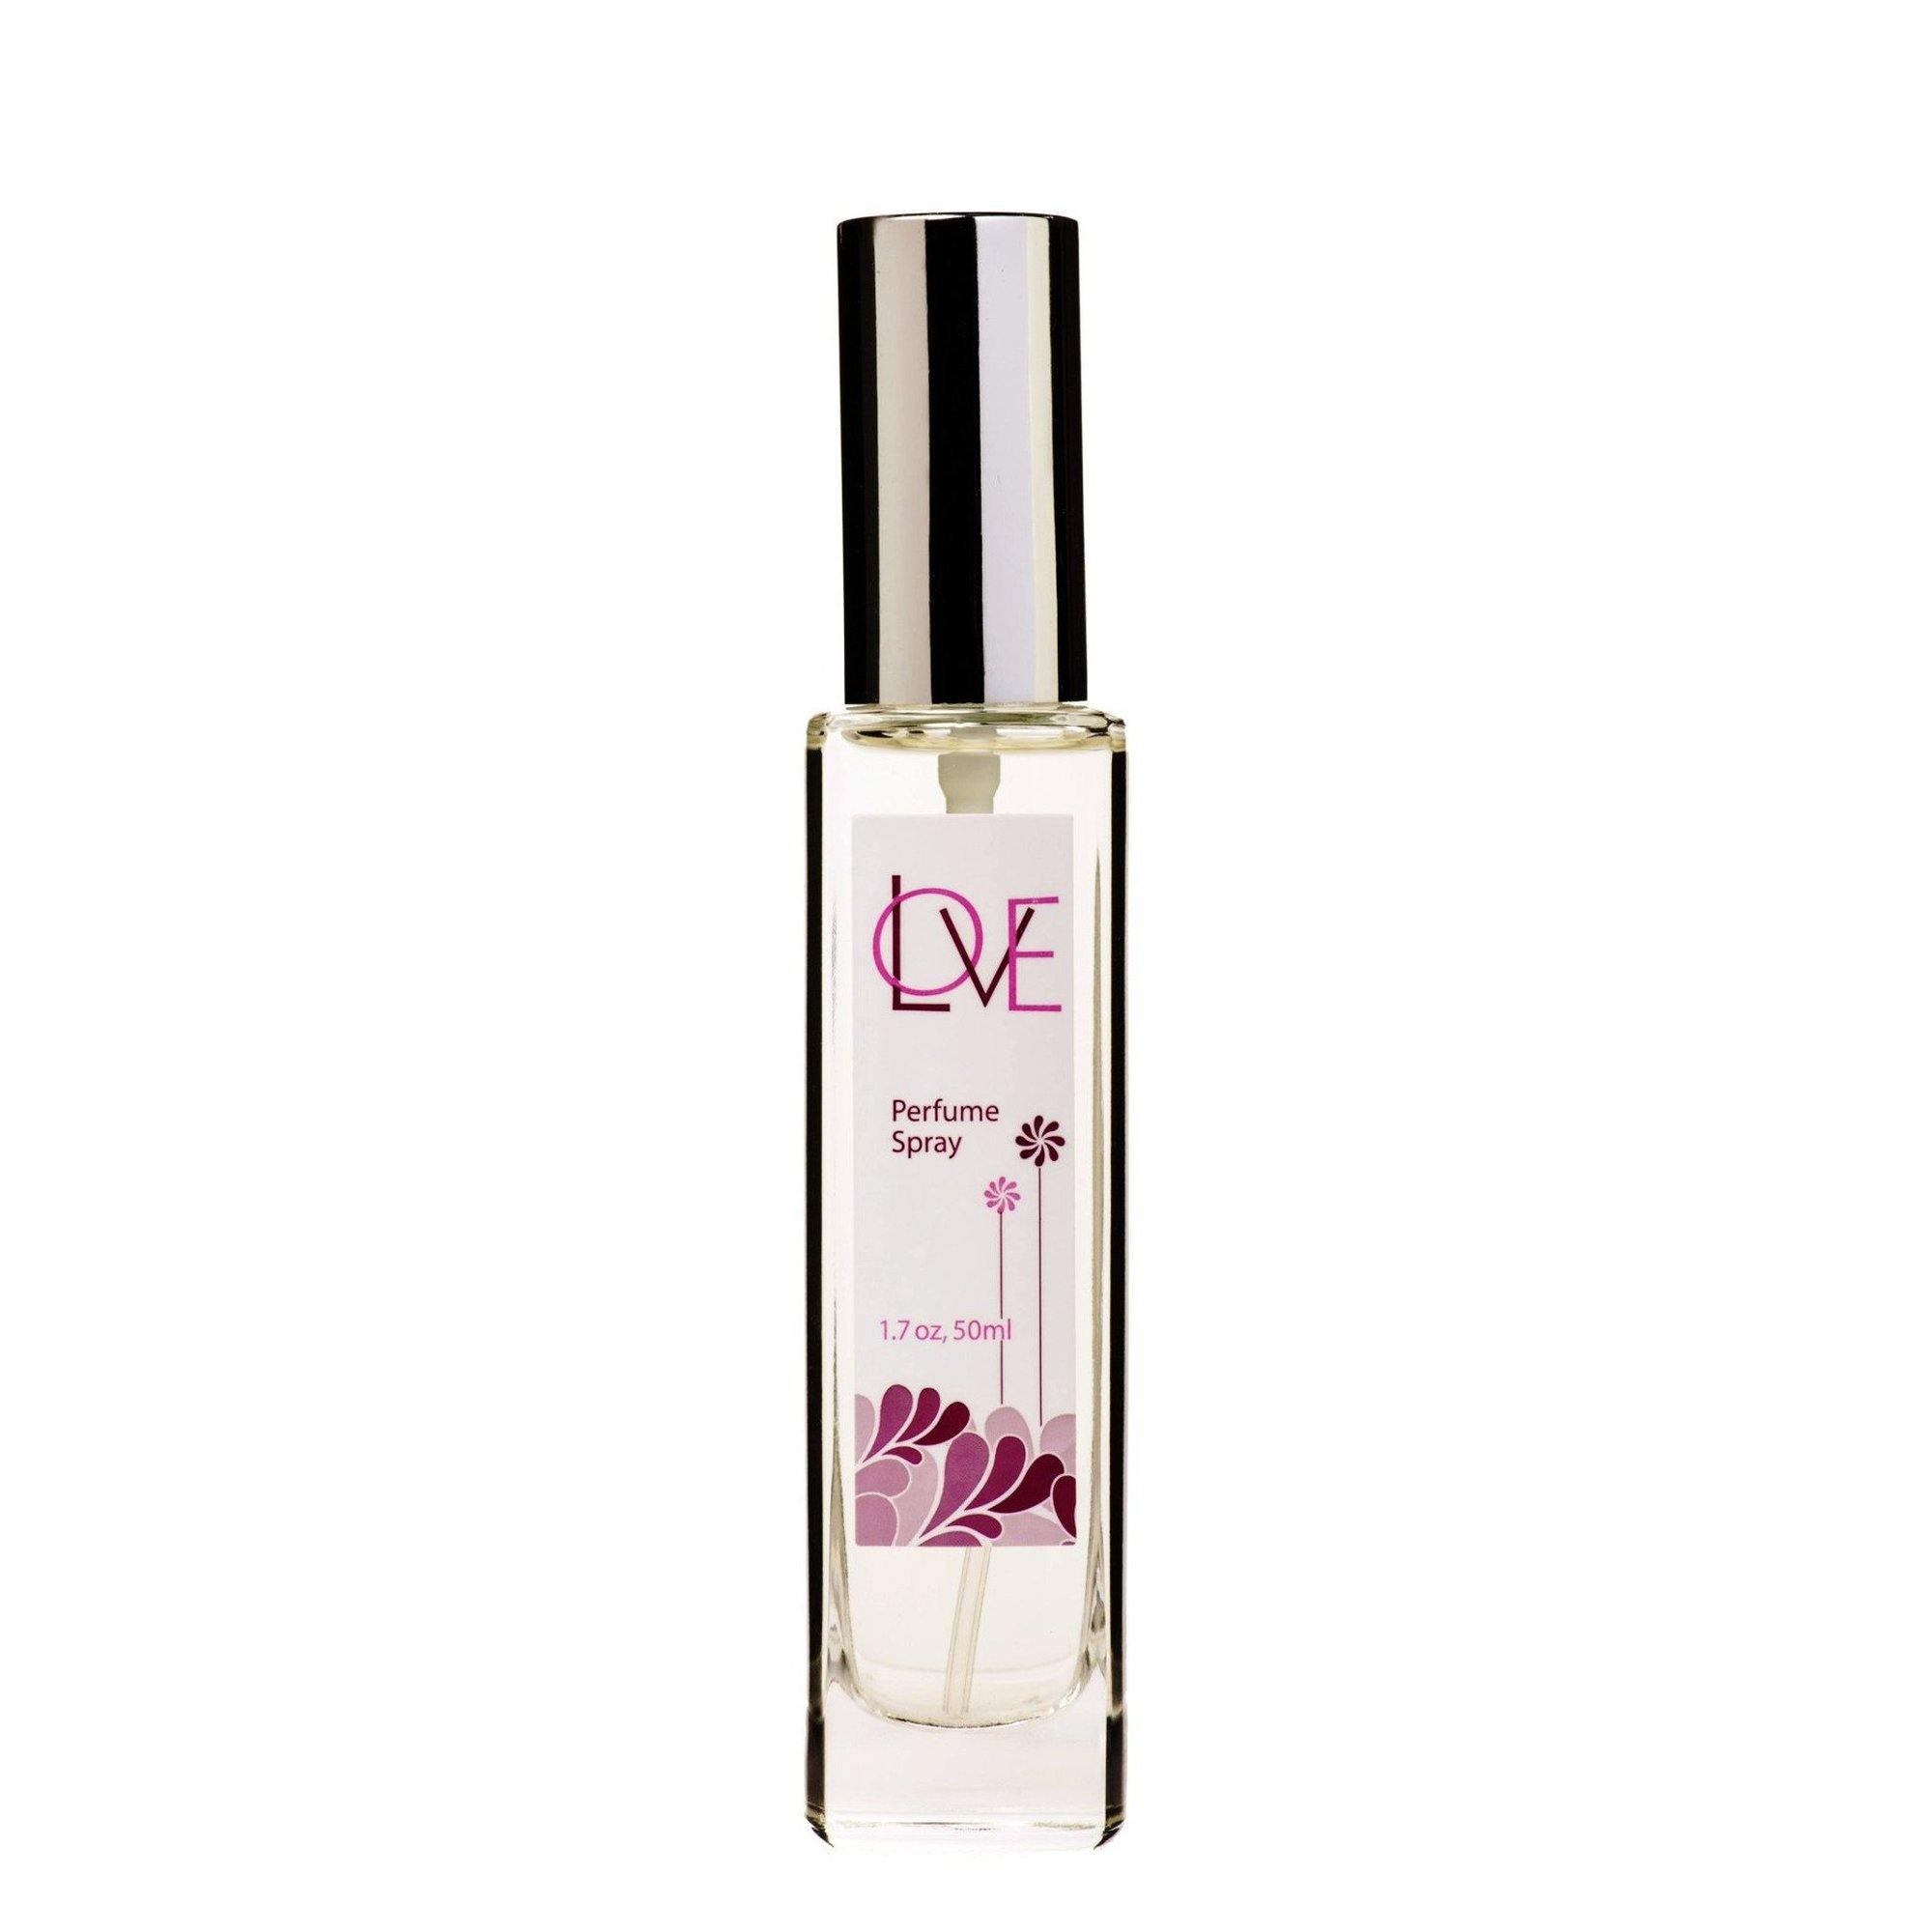 The love perfume.